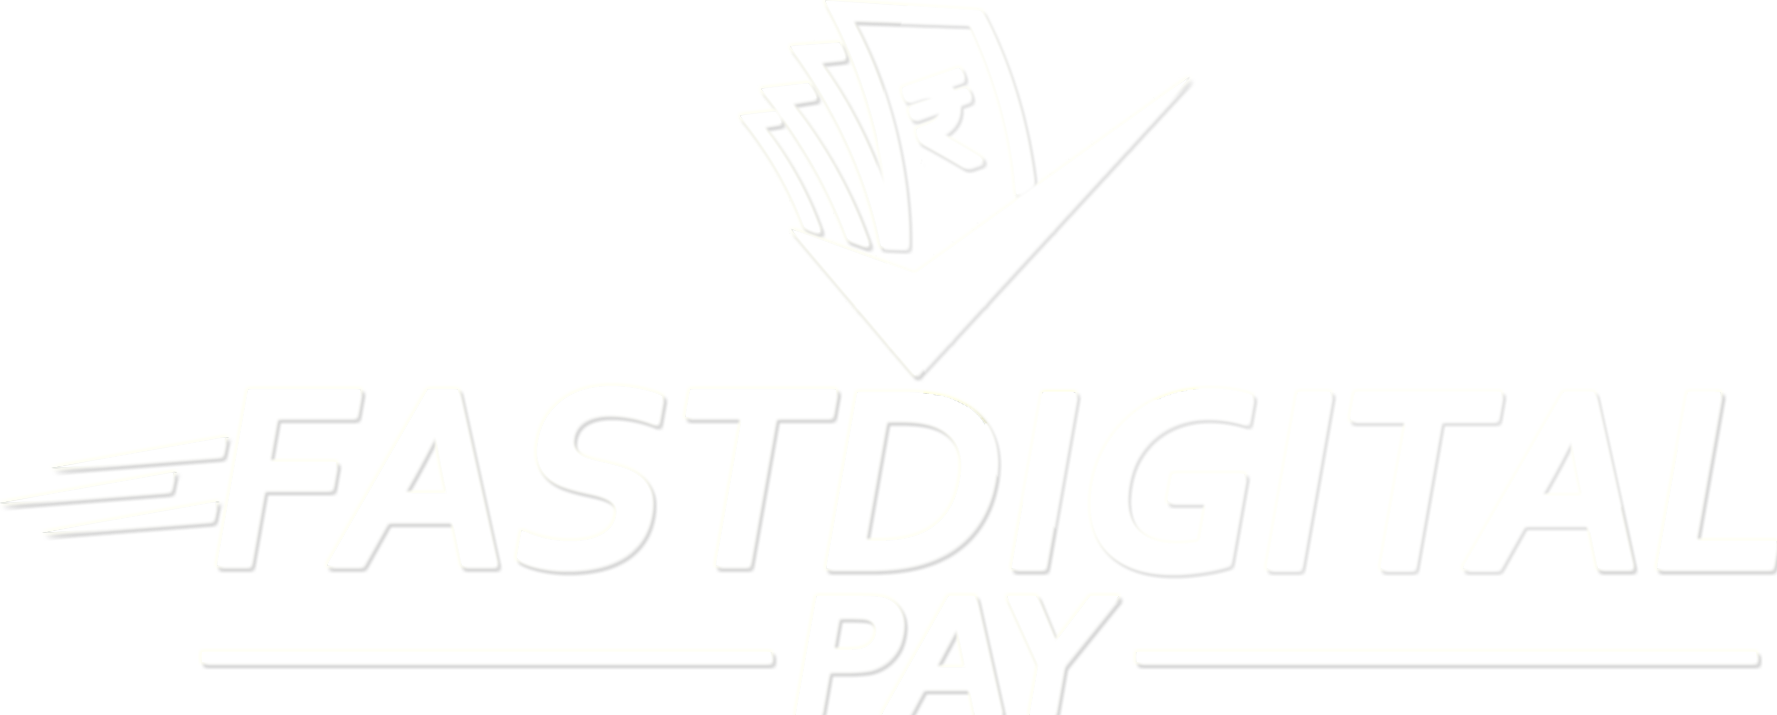 Fast Digital Pay